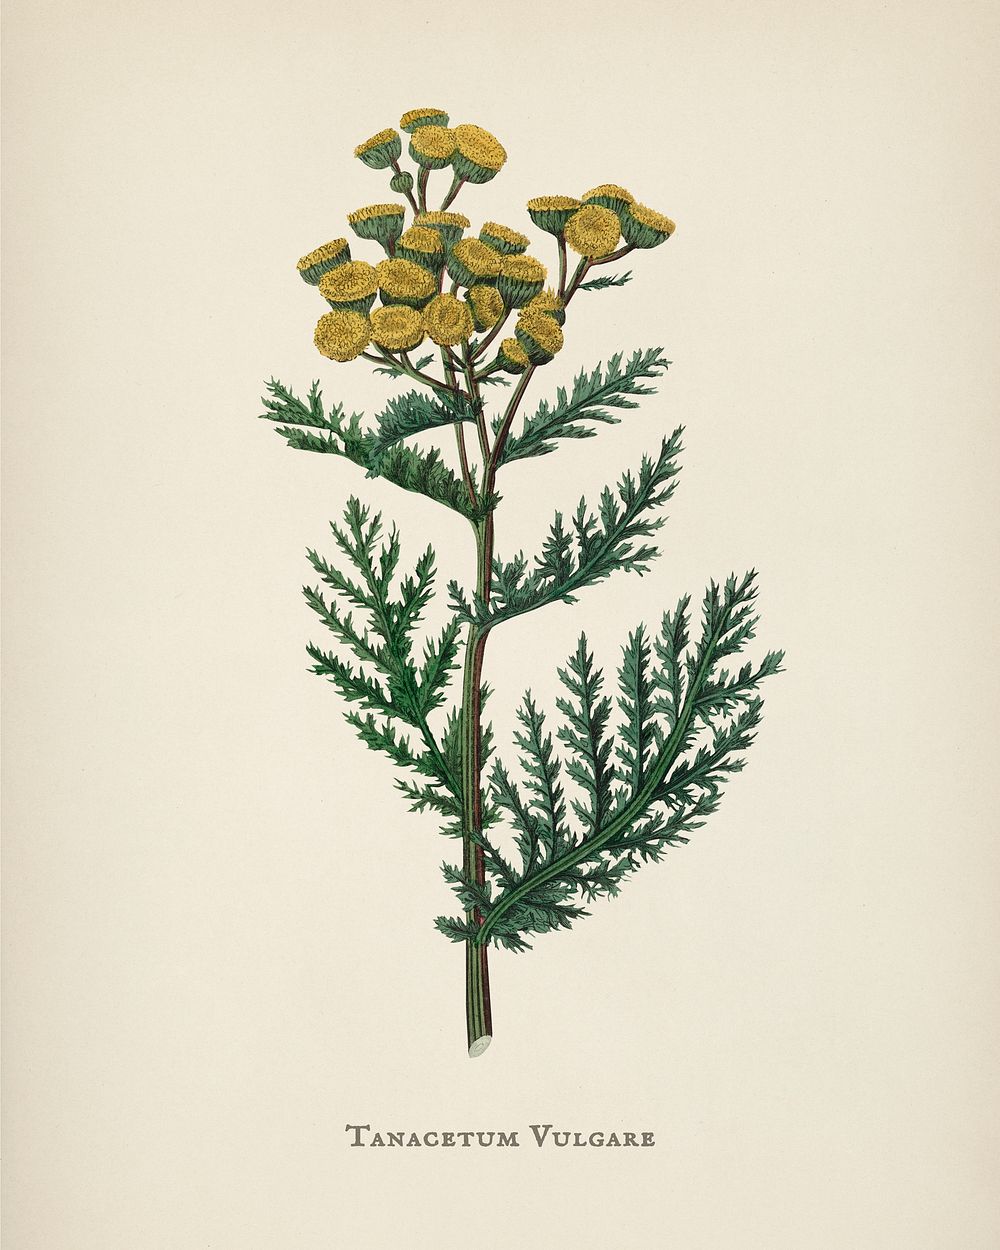 Tansy (Tanacetum vulgare) illustration from Medical Botany (1836) by John Stephenson and James Morss Churchill.